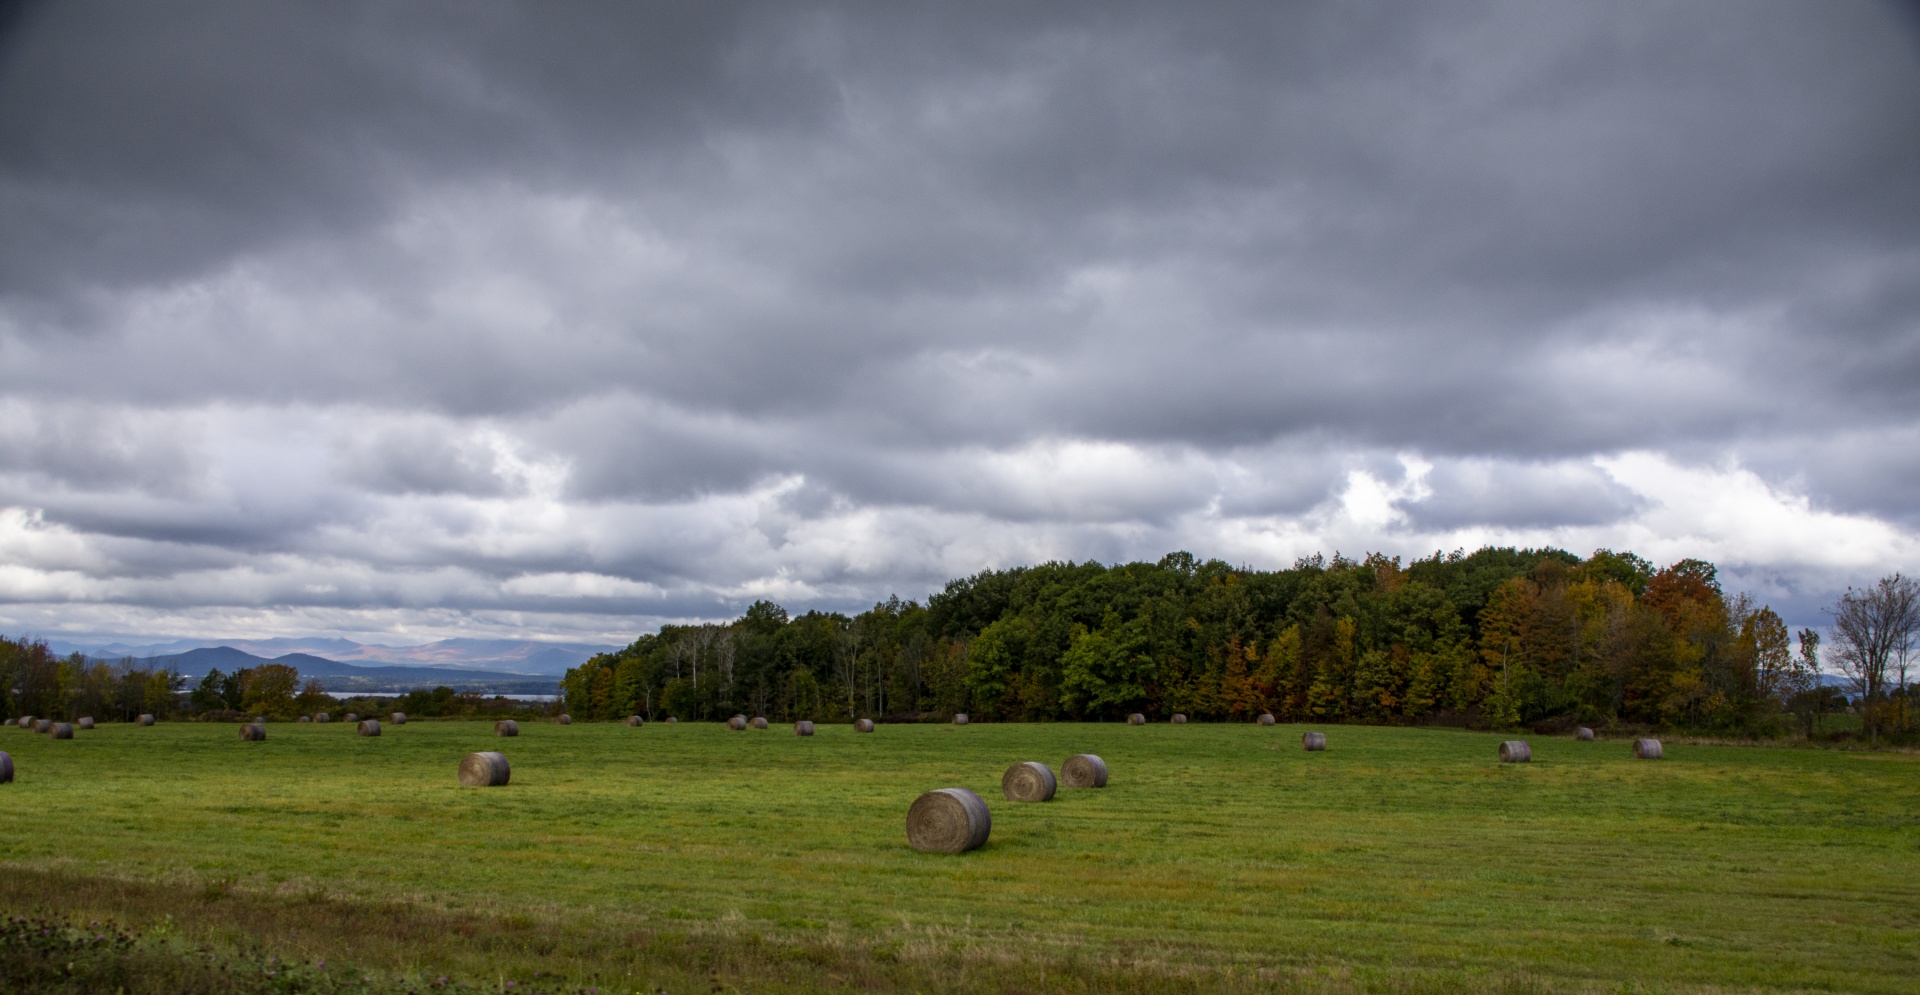 bales of hay on a grassy field underneath cloudy dark sky